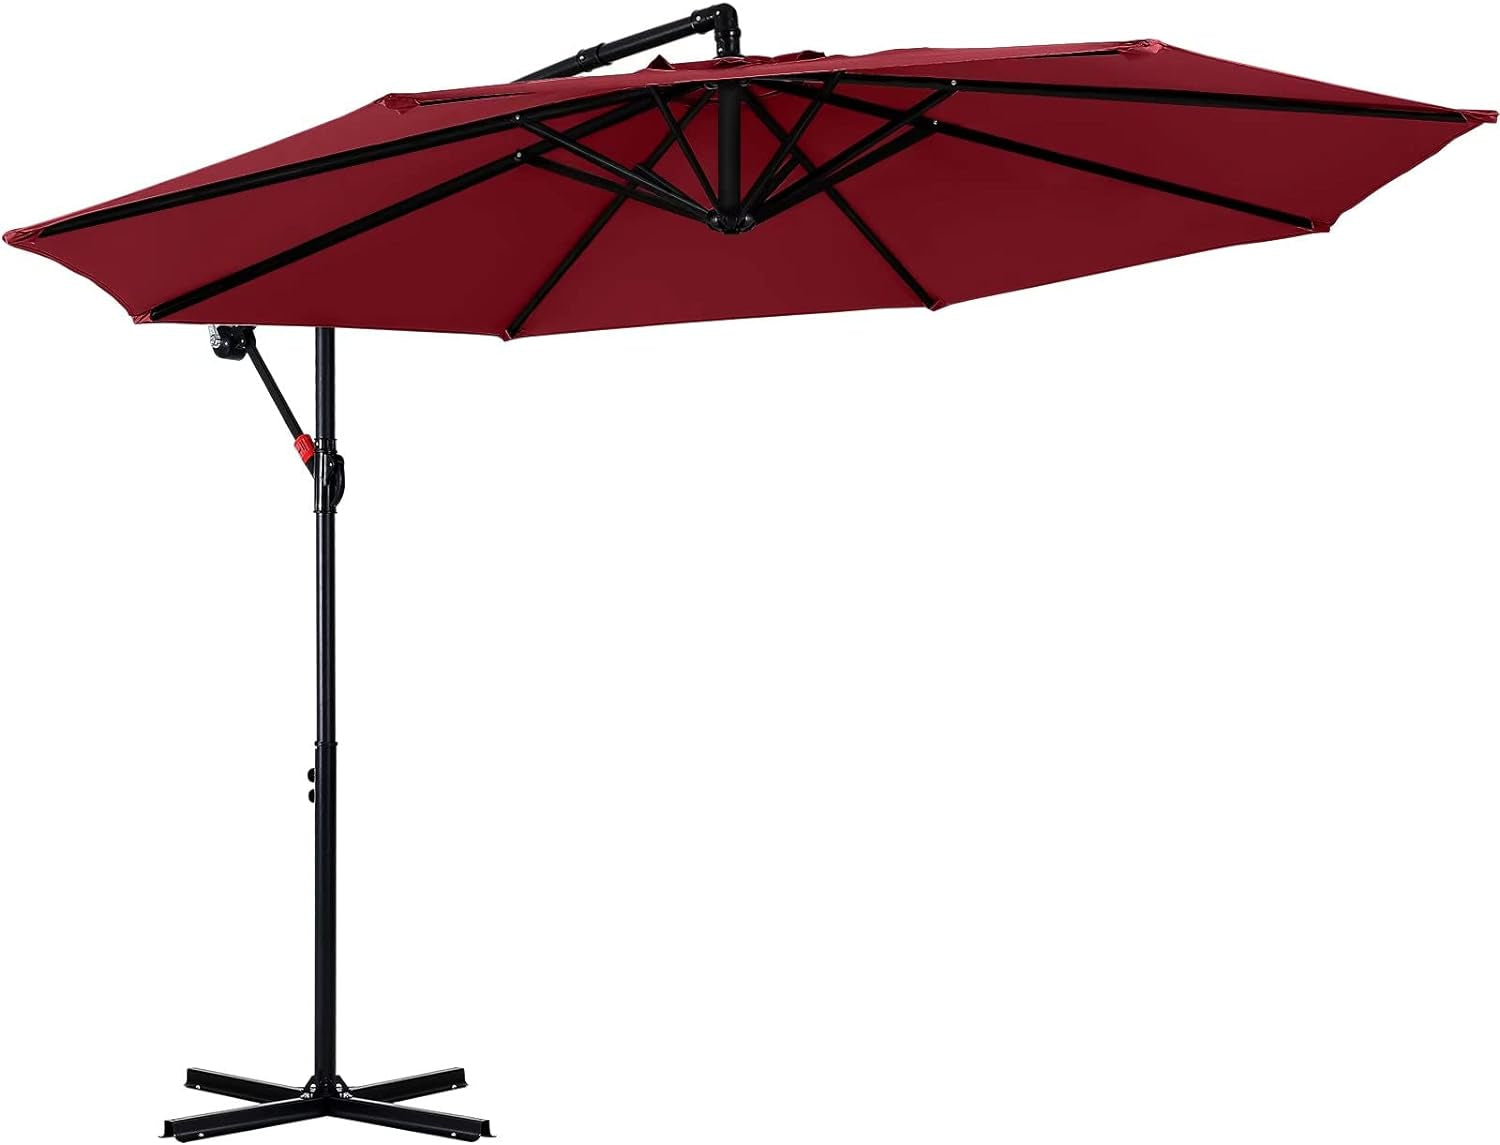 Cantilever Patio Umbrellas 10FT Burgundy